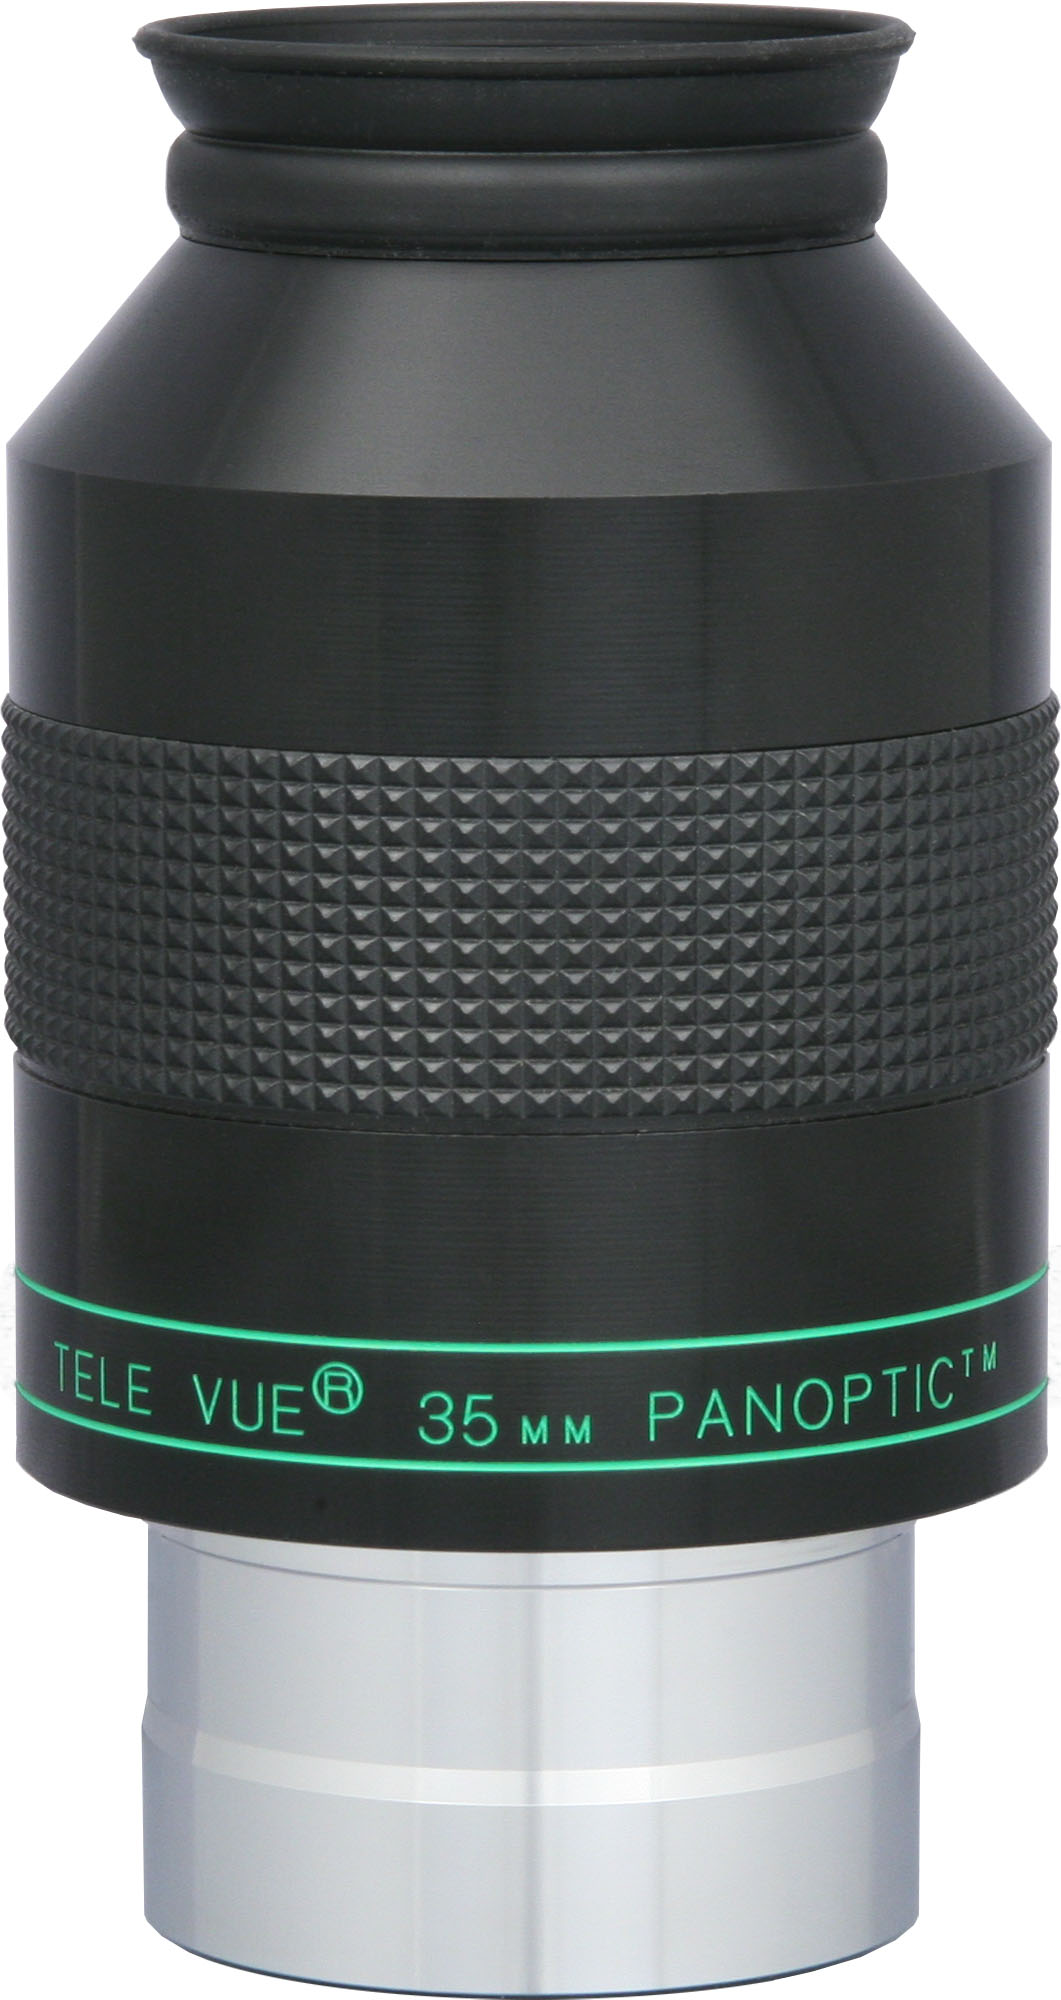 Panoptic 35mm Eyepiece